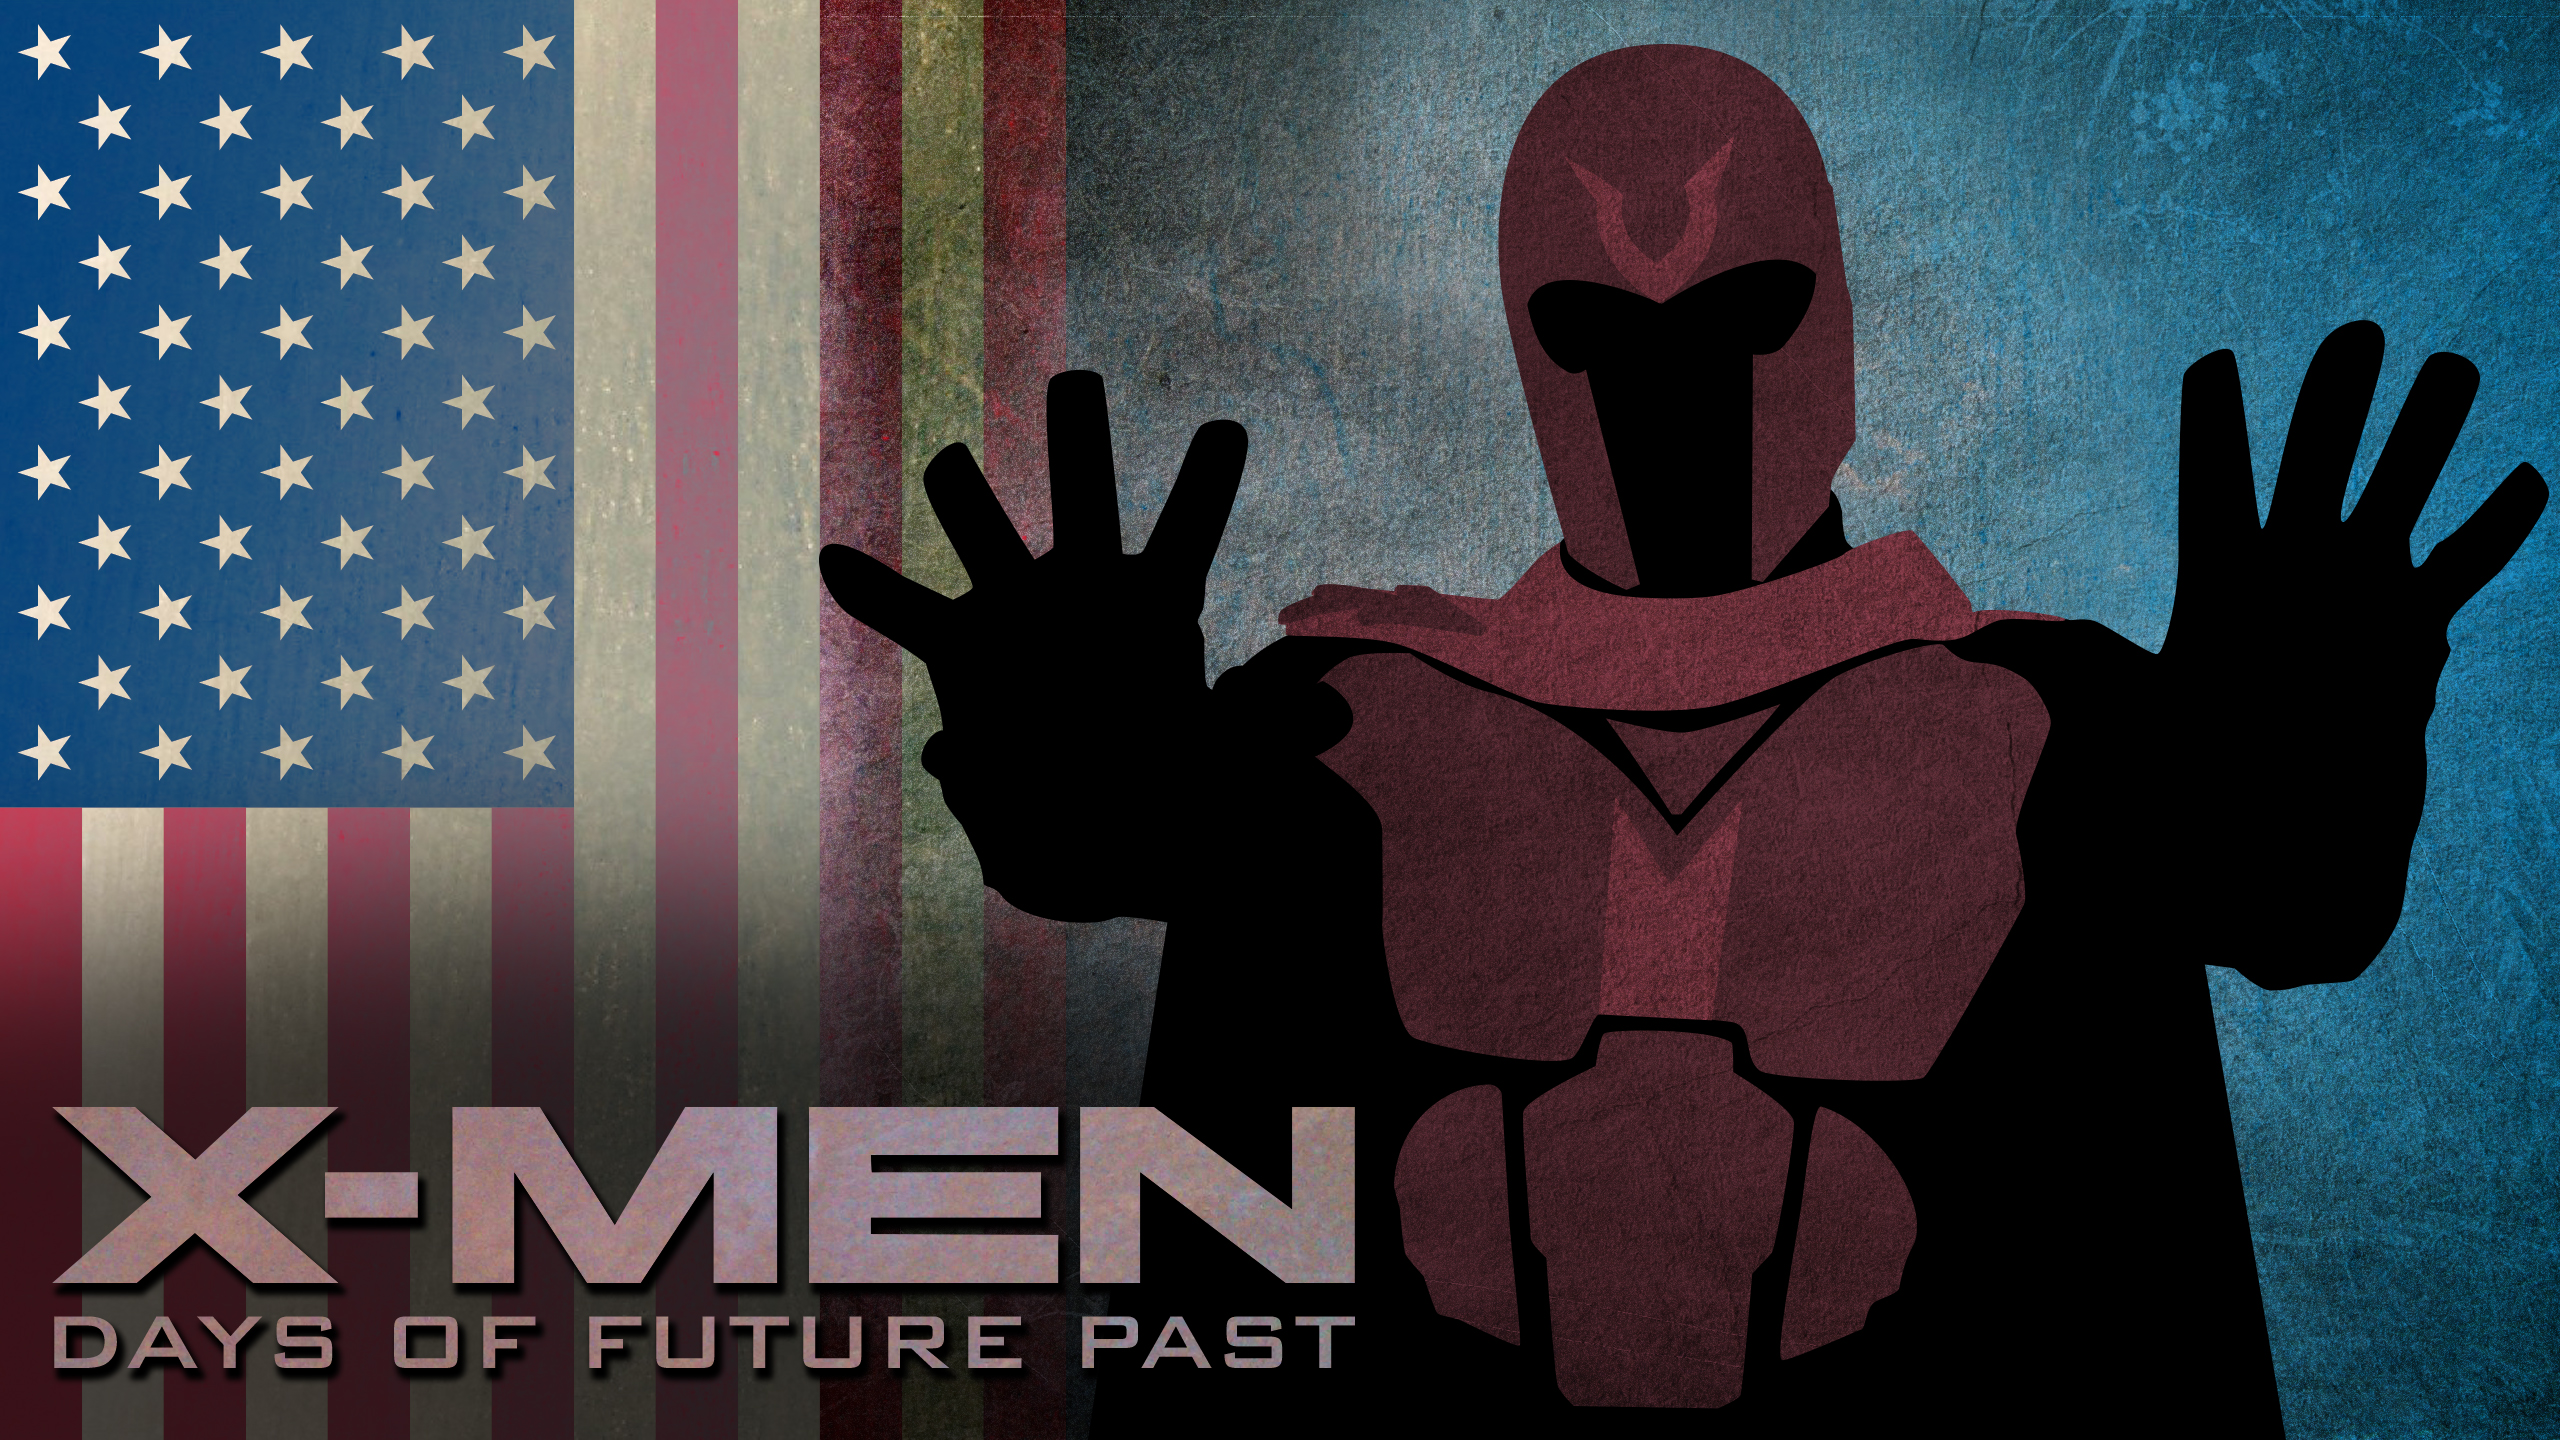 X MEN Days of Future Past - Magneto Wallpaper by M Kow on DeviantArt